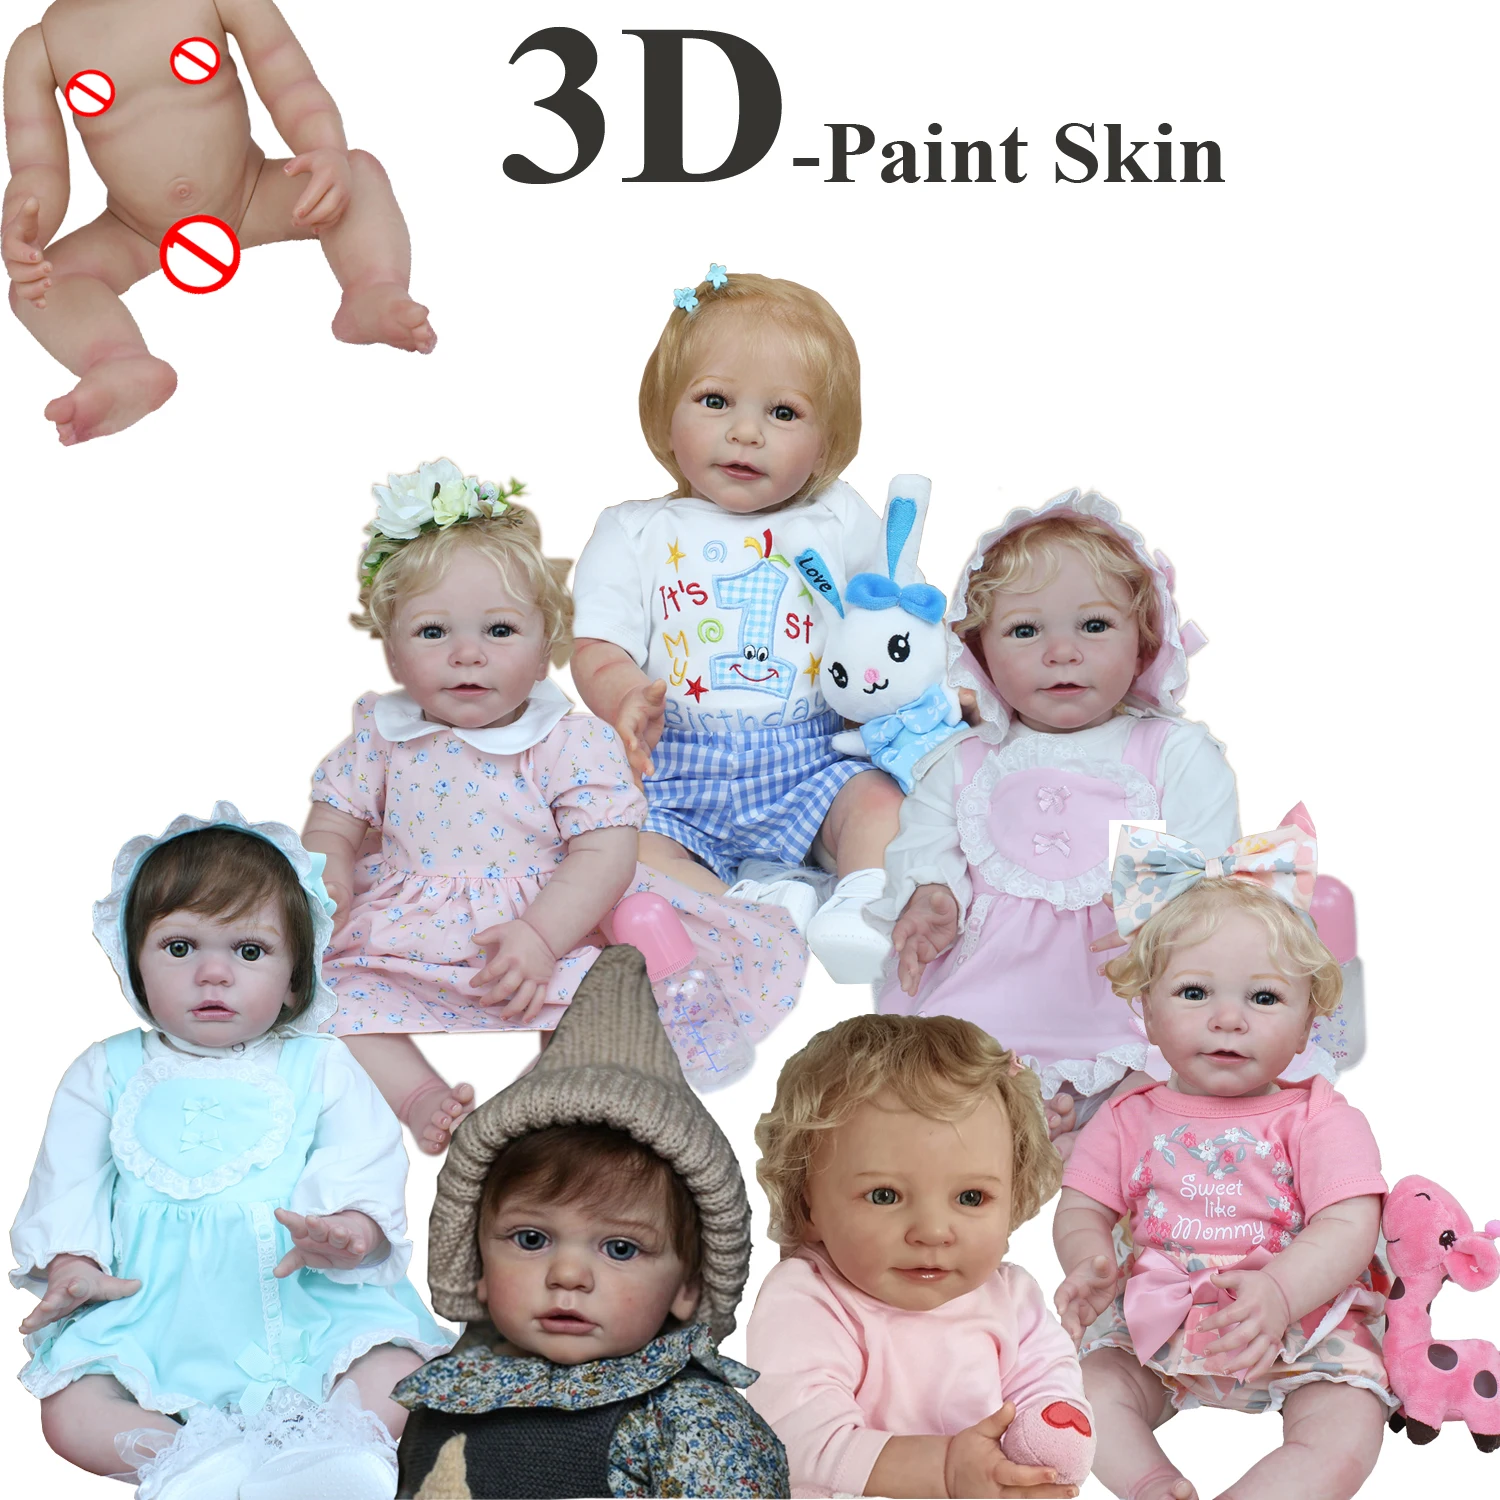 55 CM 3D-Paint Skin Full Soft Silicone Body Reborn Baby Girl Doll Toy 22 Inch Vinyl Dress Up Bathe Boneca Birthday Gift Present